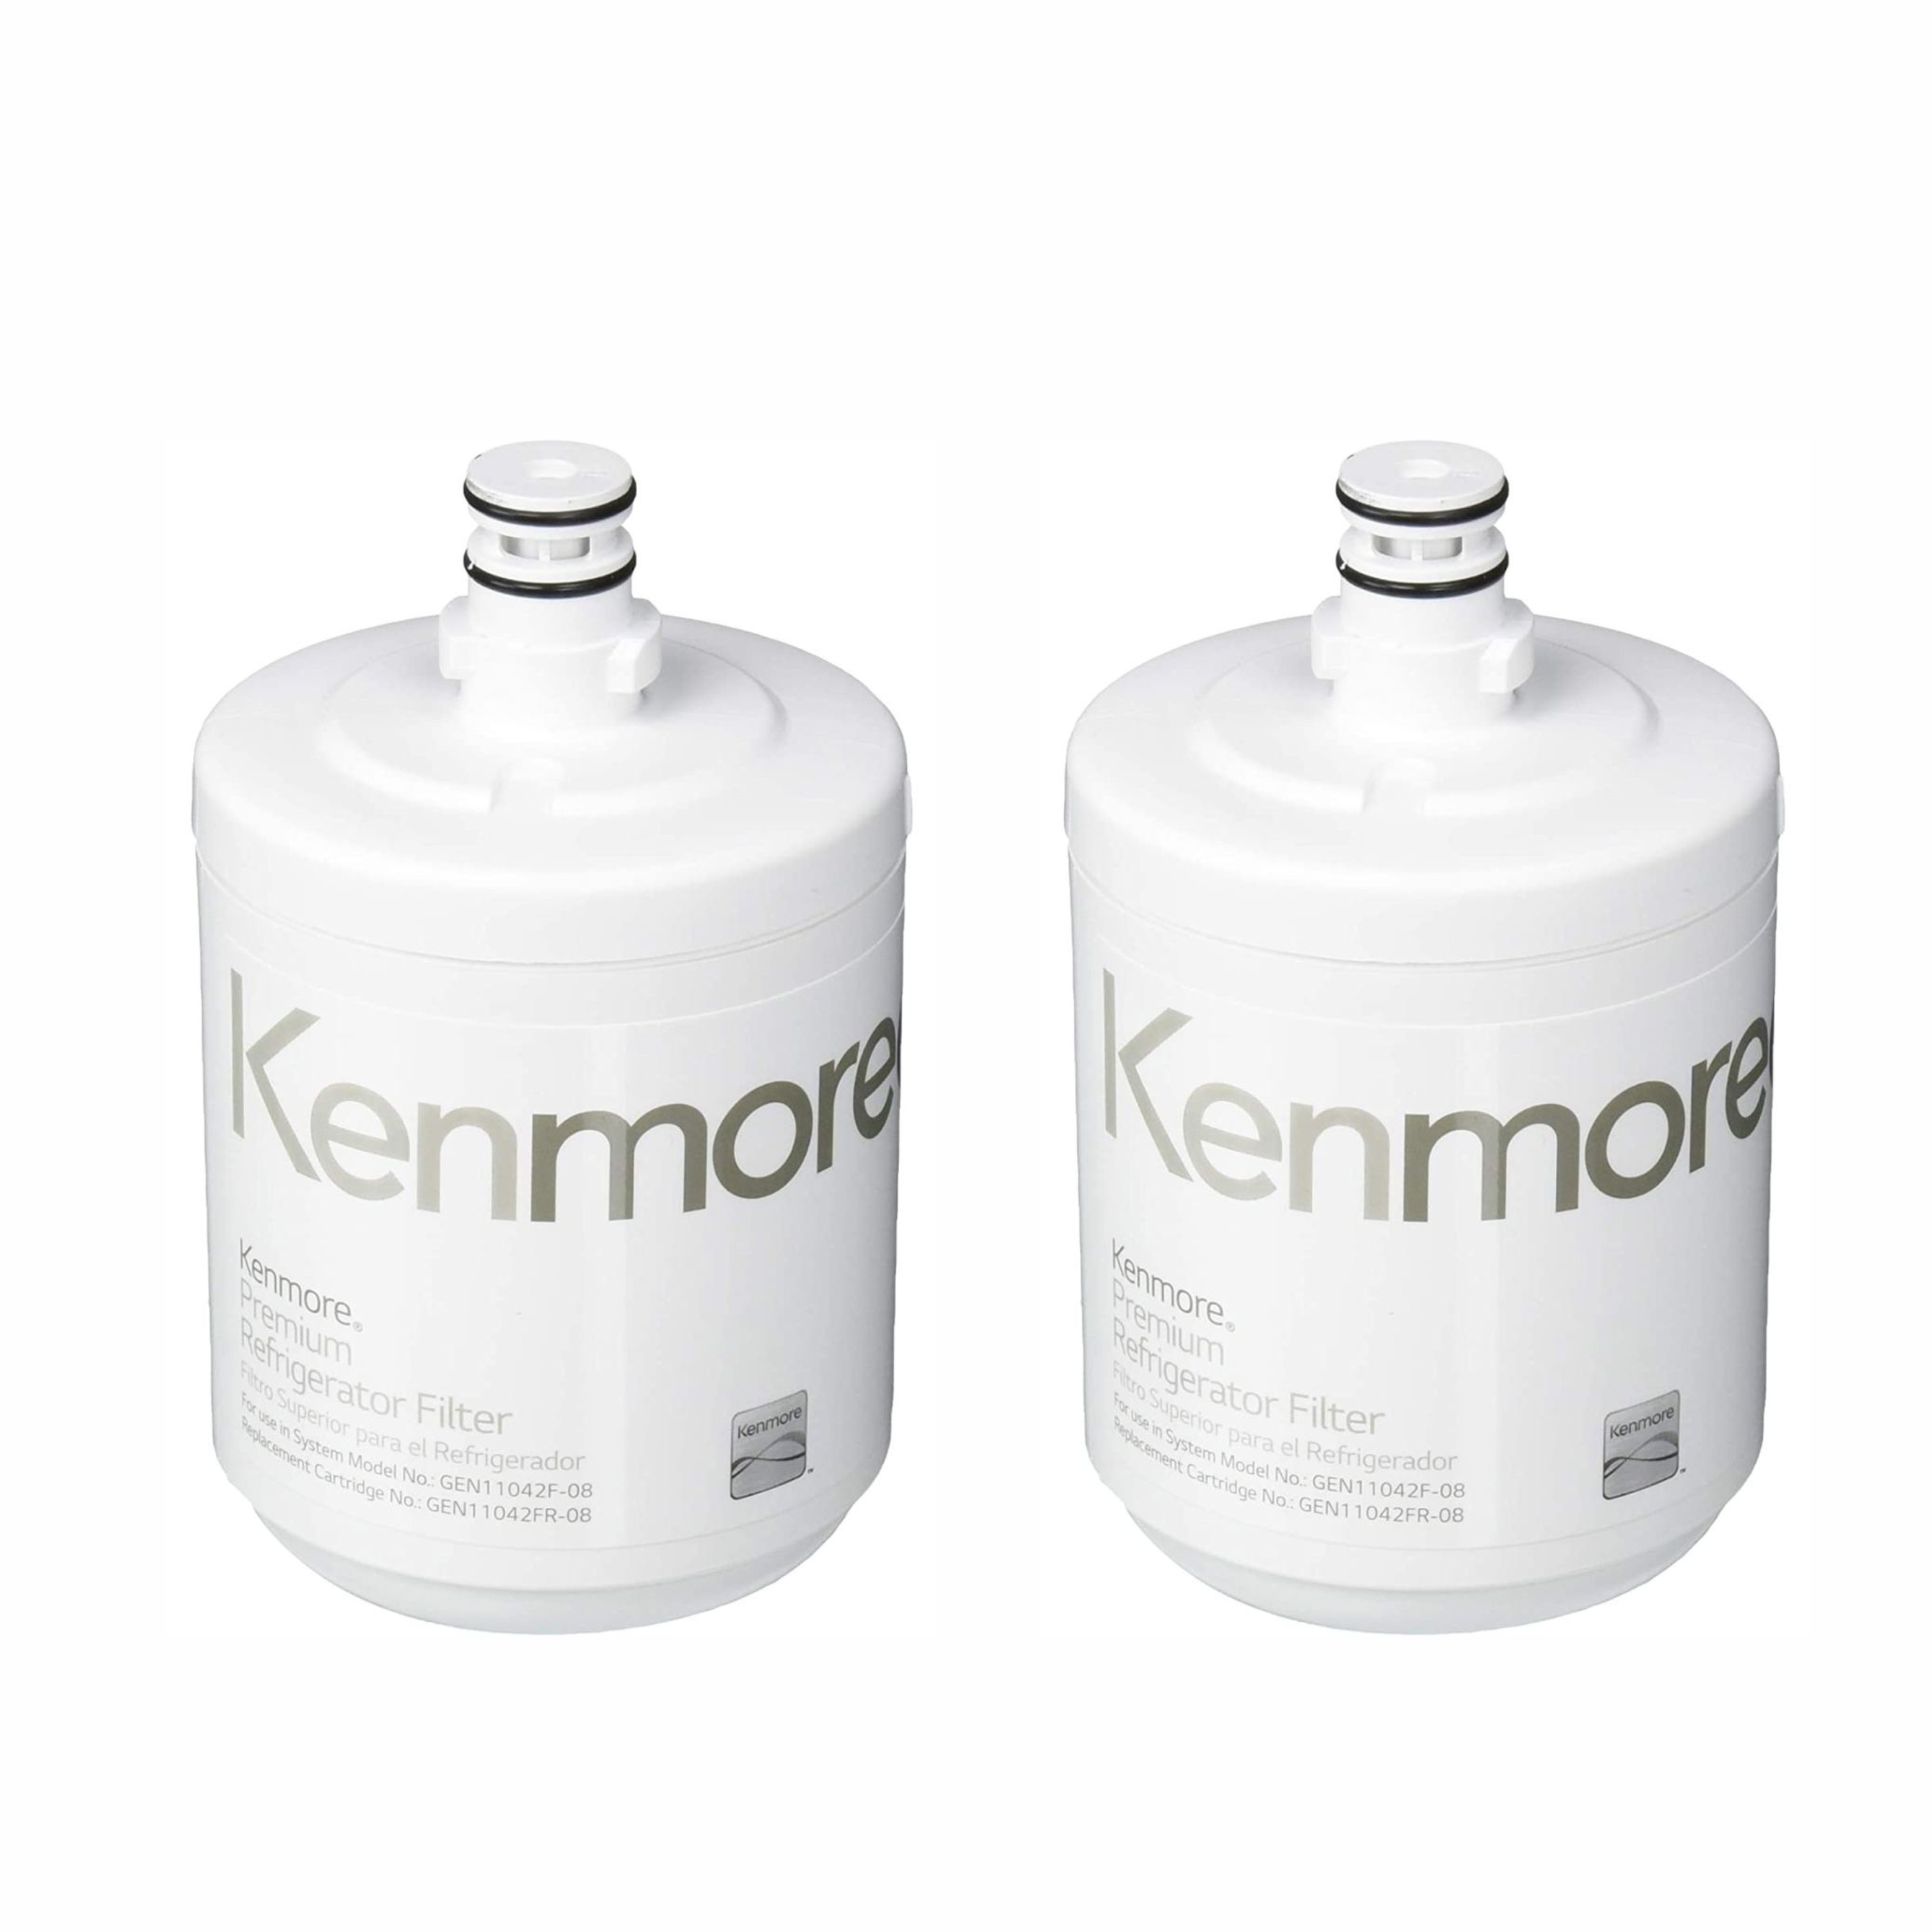 Kenmore 9890 Replacement Refrigerator Water Filter